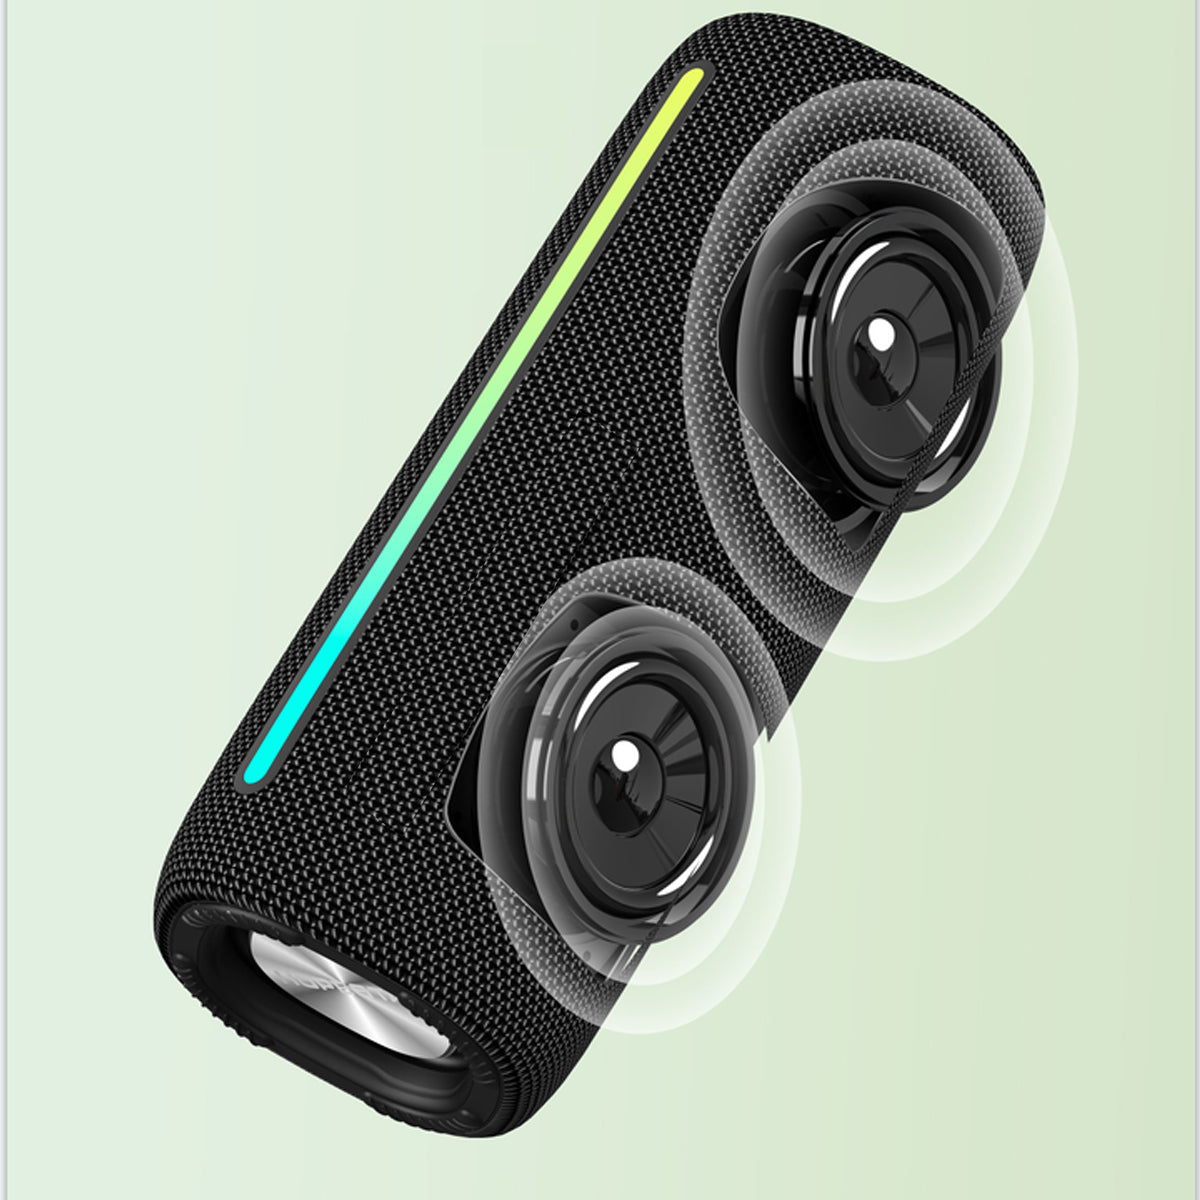 Boomerang XT High-Quality Bluetooth NFC Speaker by VistaShops